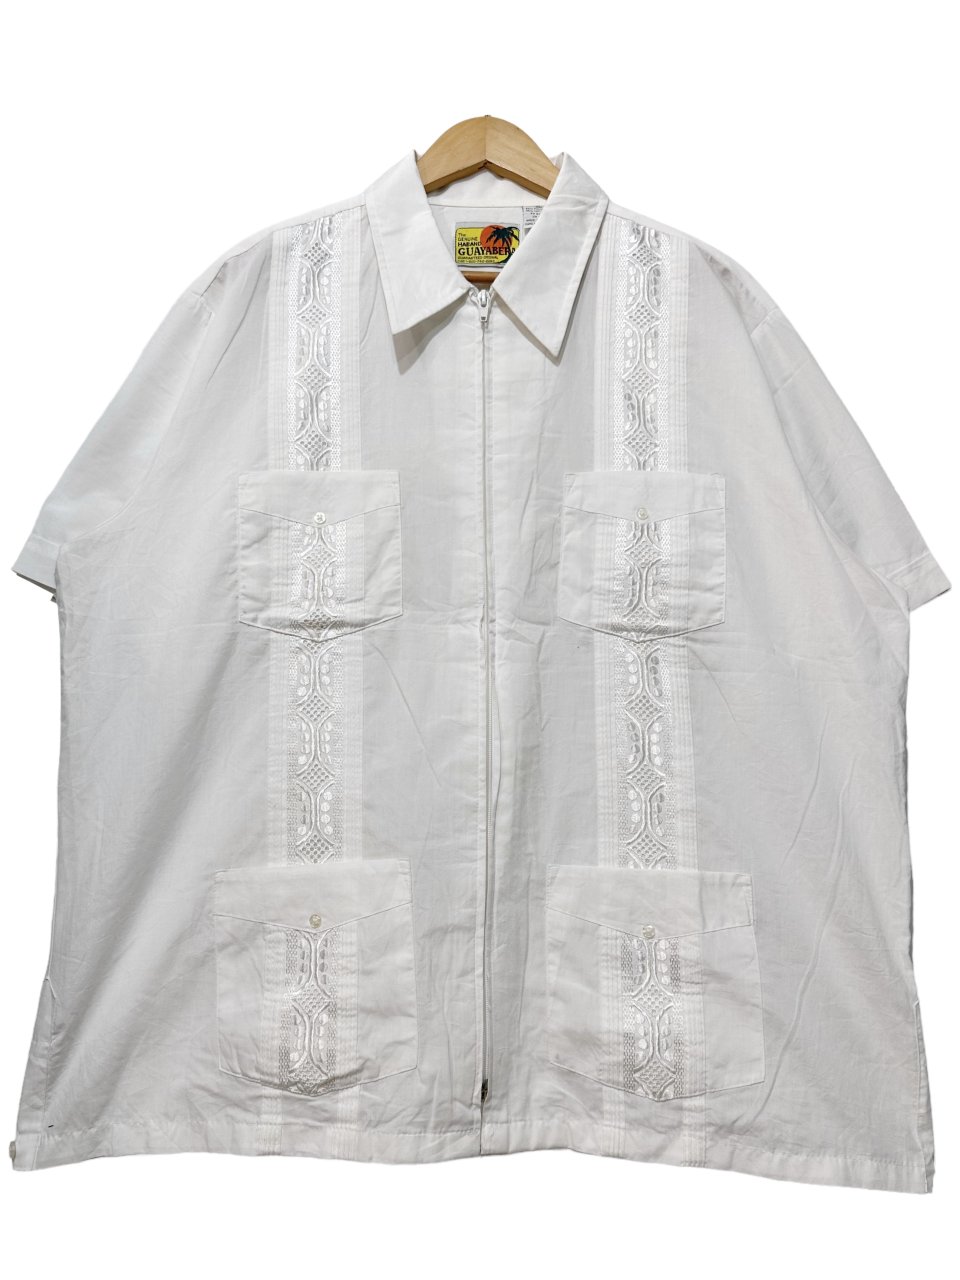 【John Blair】90's  キューバシャツ風 ジップシャツ A-828